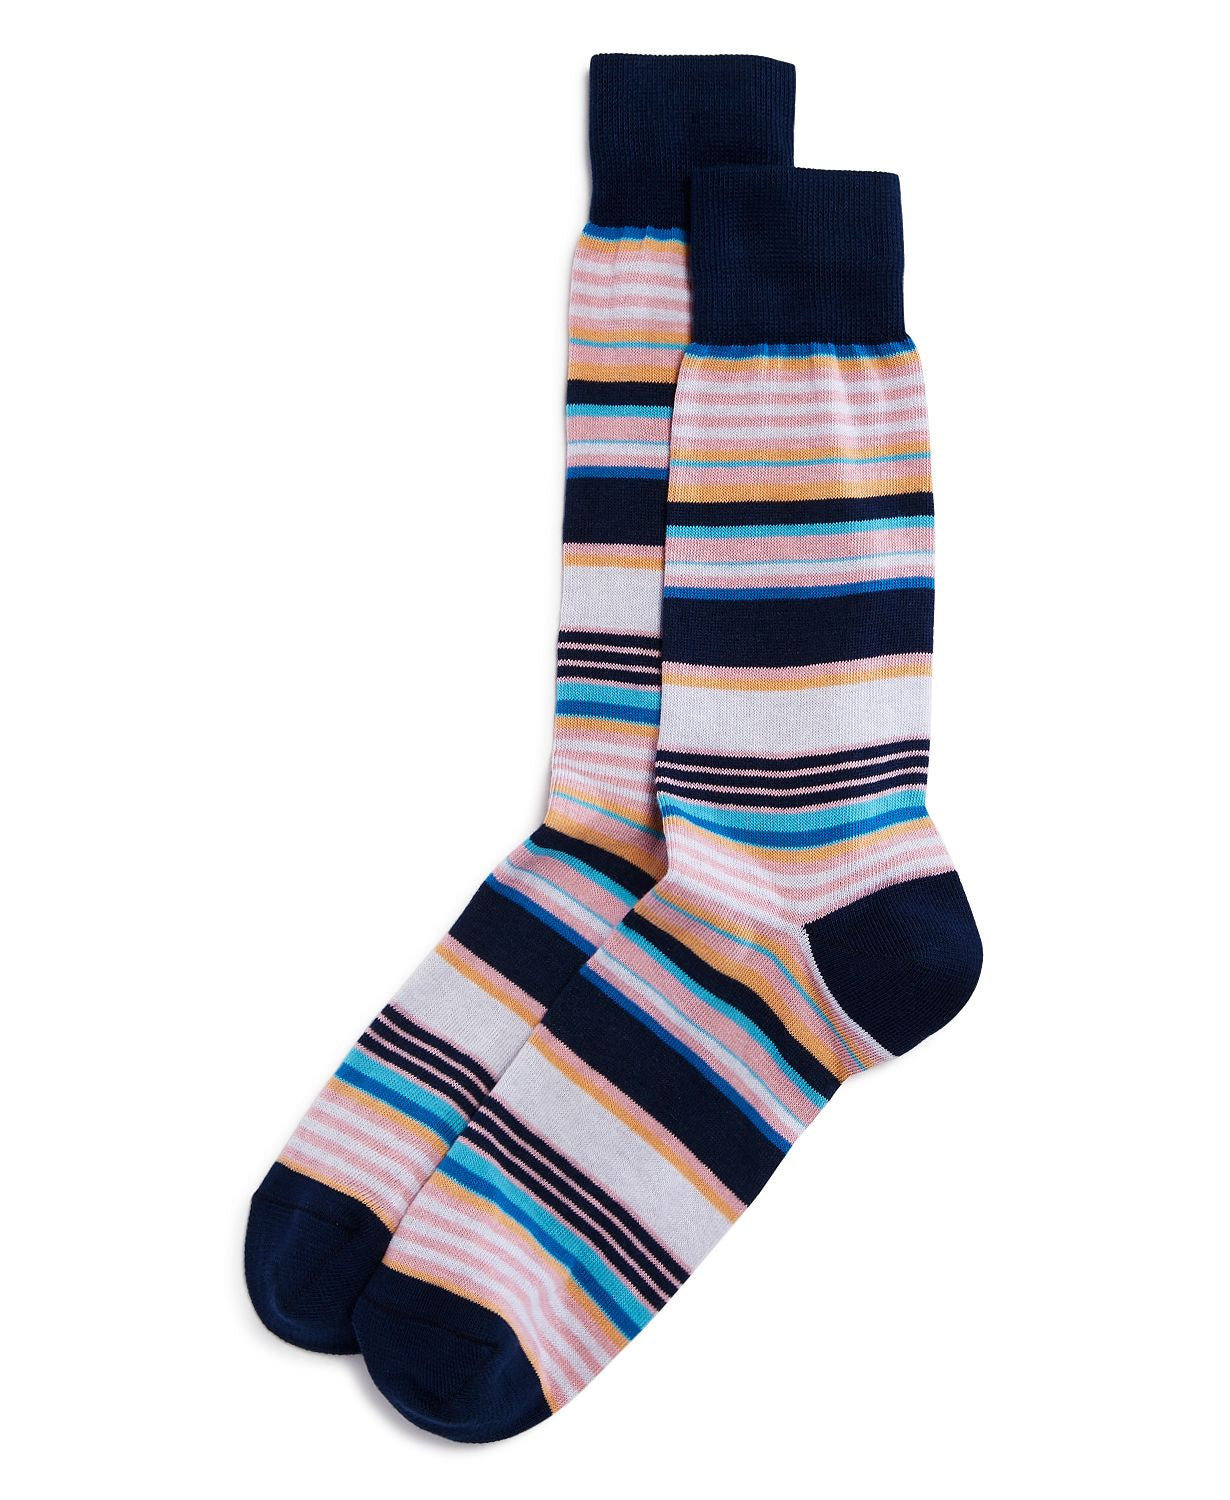 The Men's Store Striped Socks Navy